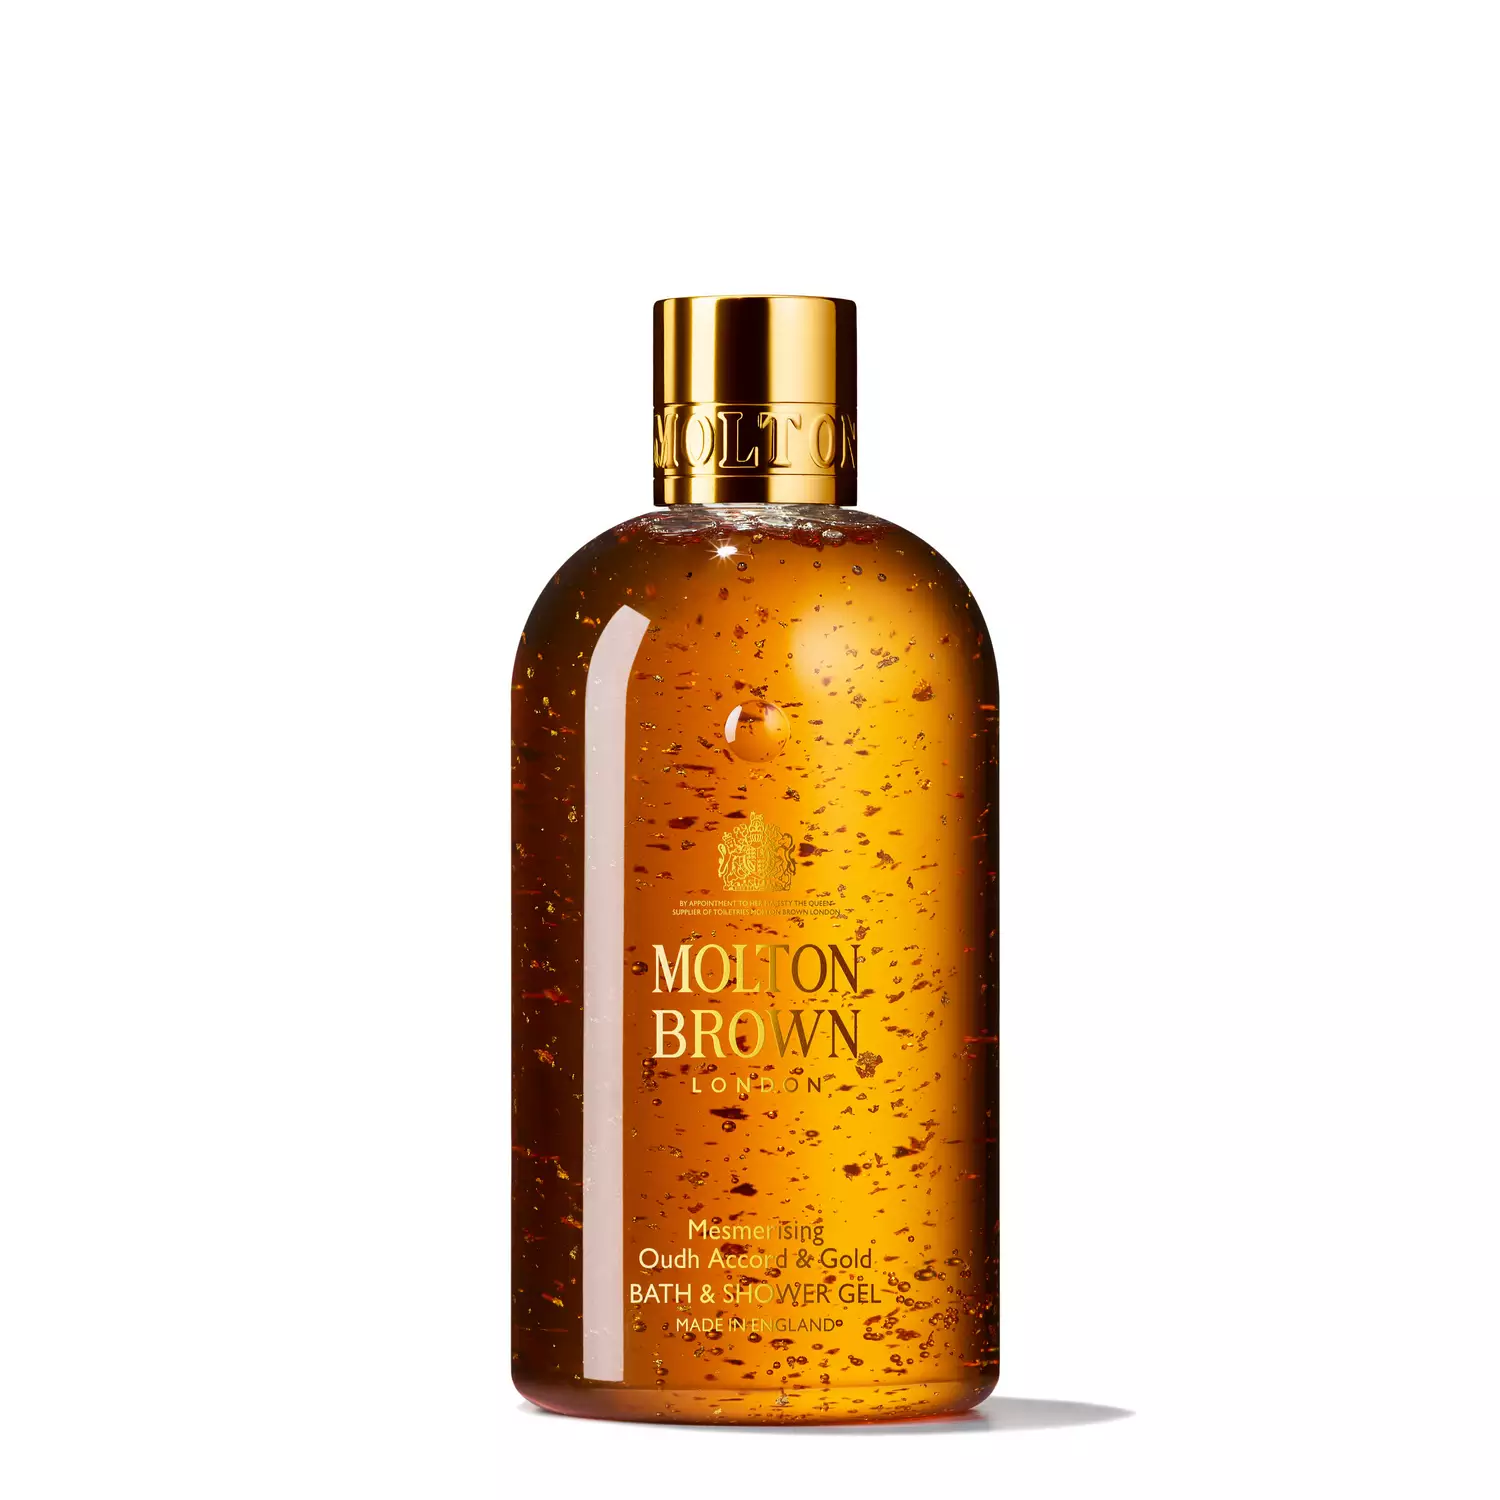 Molton Brown - Mesmerising Oudh Accord & Gold - Bath & Shower Gel 